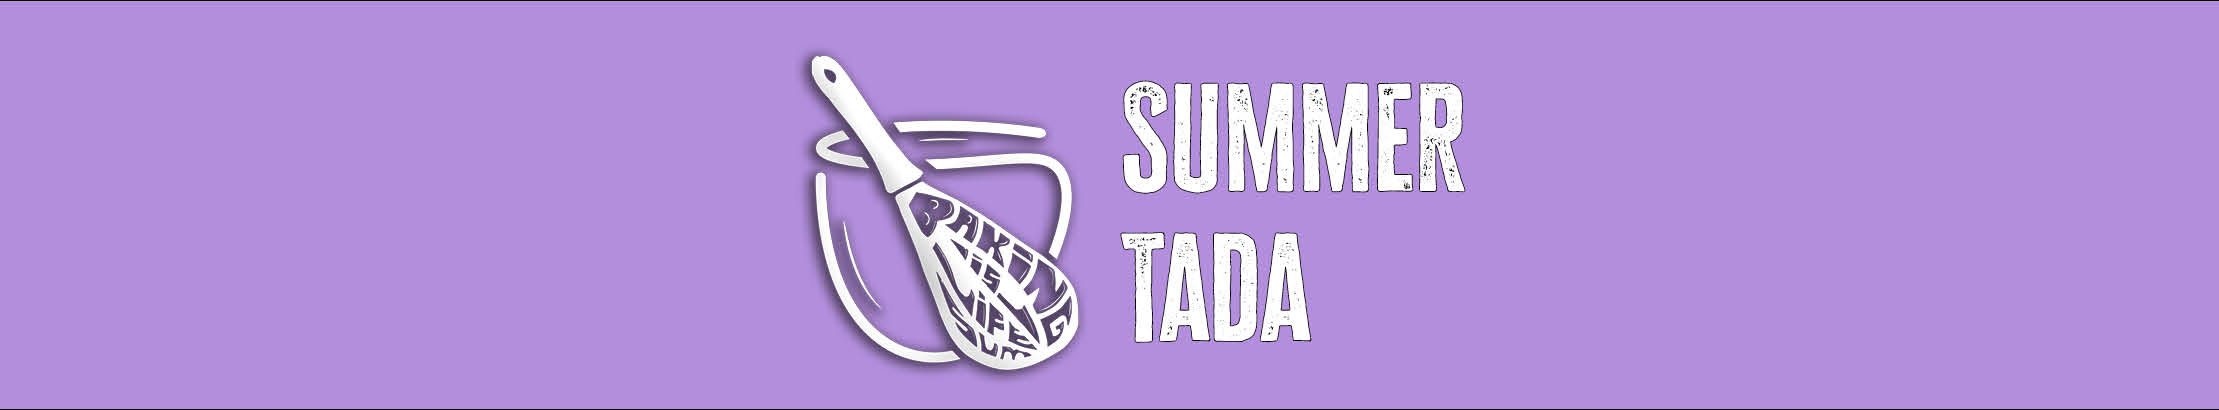 Summer Tada's profile banner